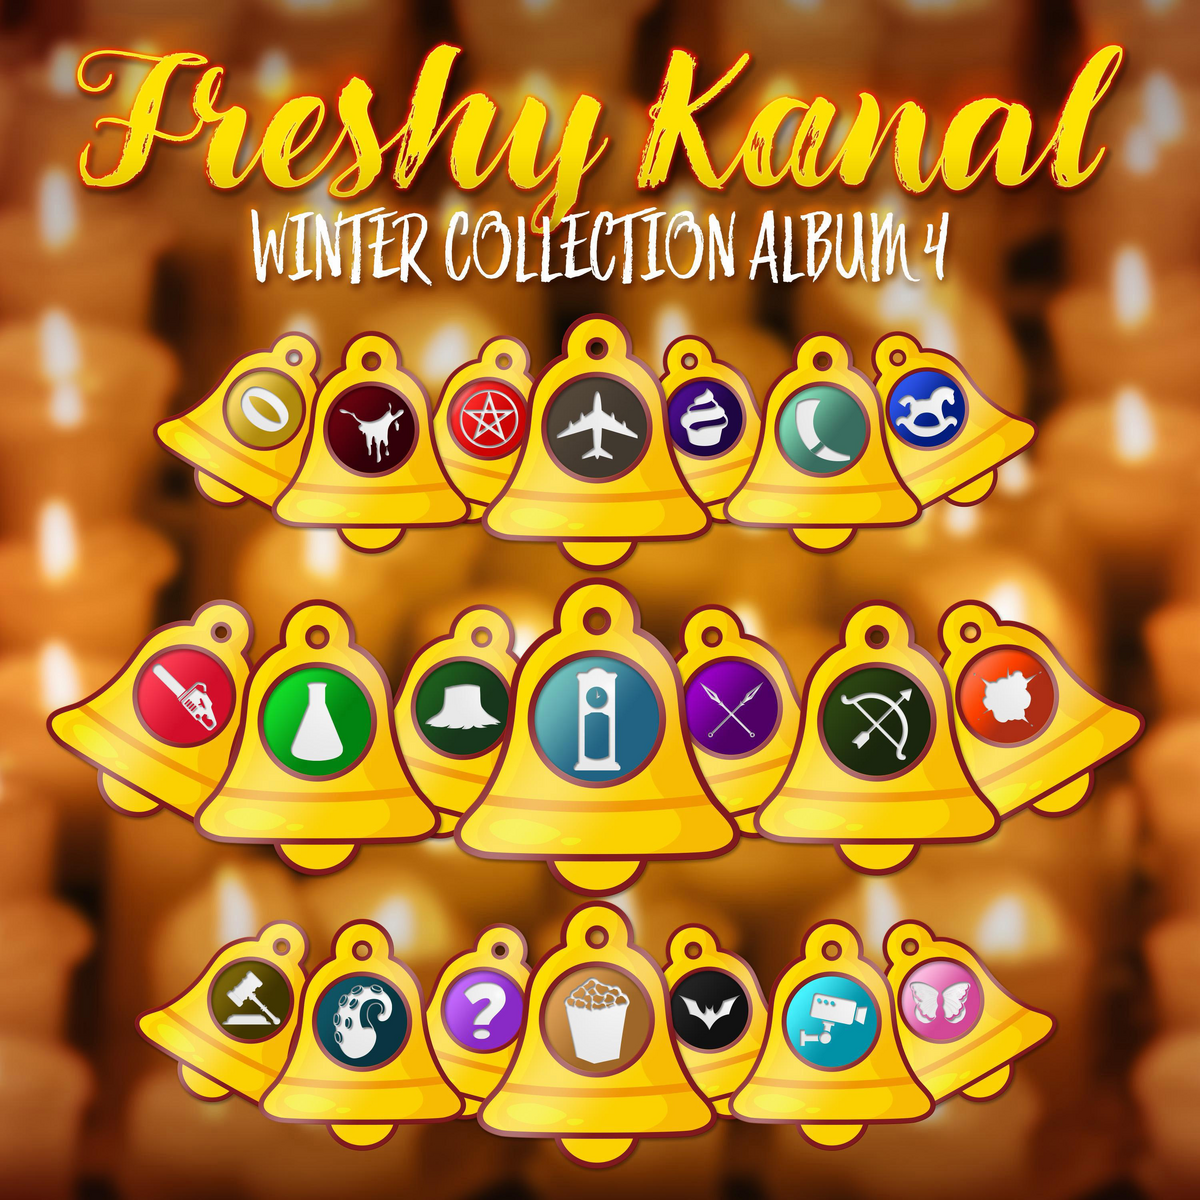 Winter Collection Album 4 Freshy Kanal Cinematic Wiki Fandom 